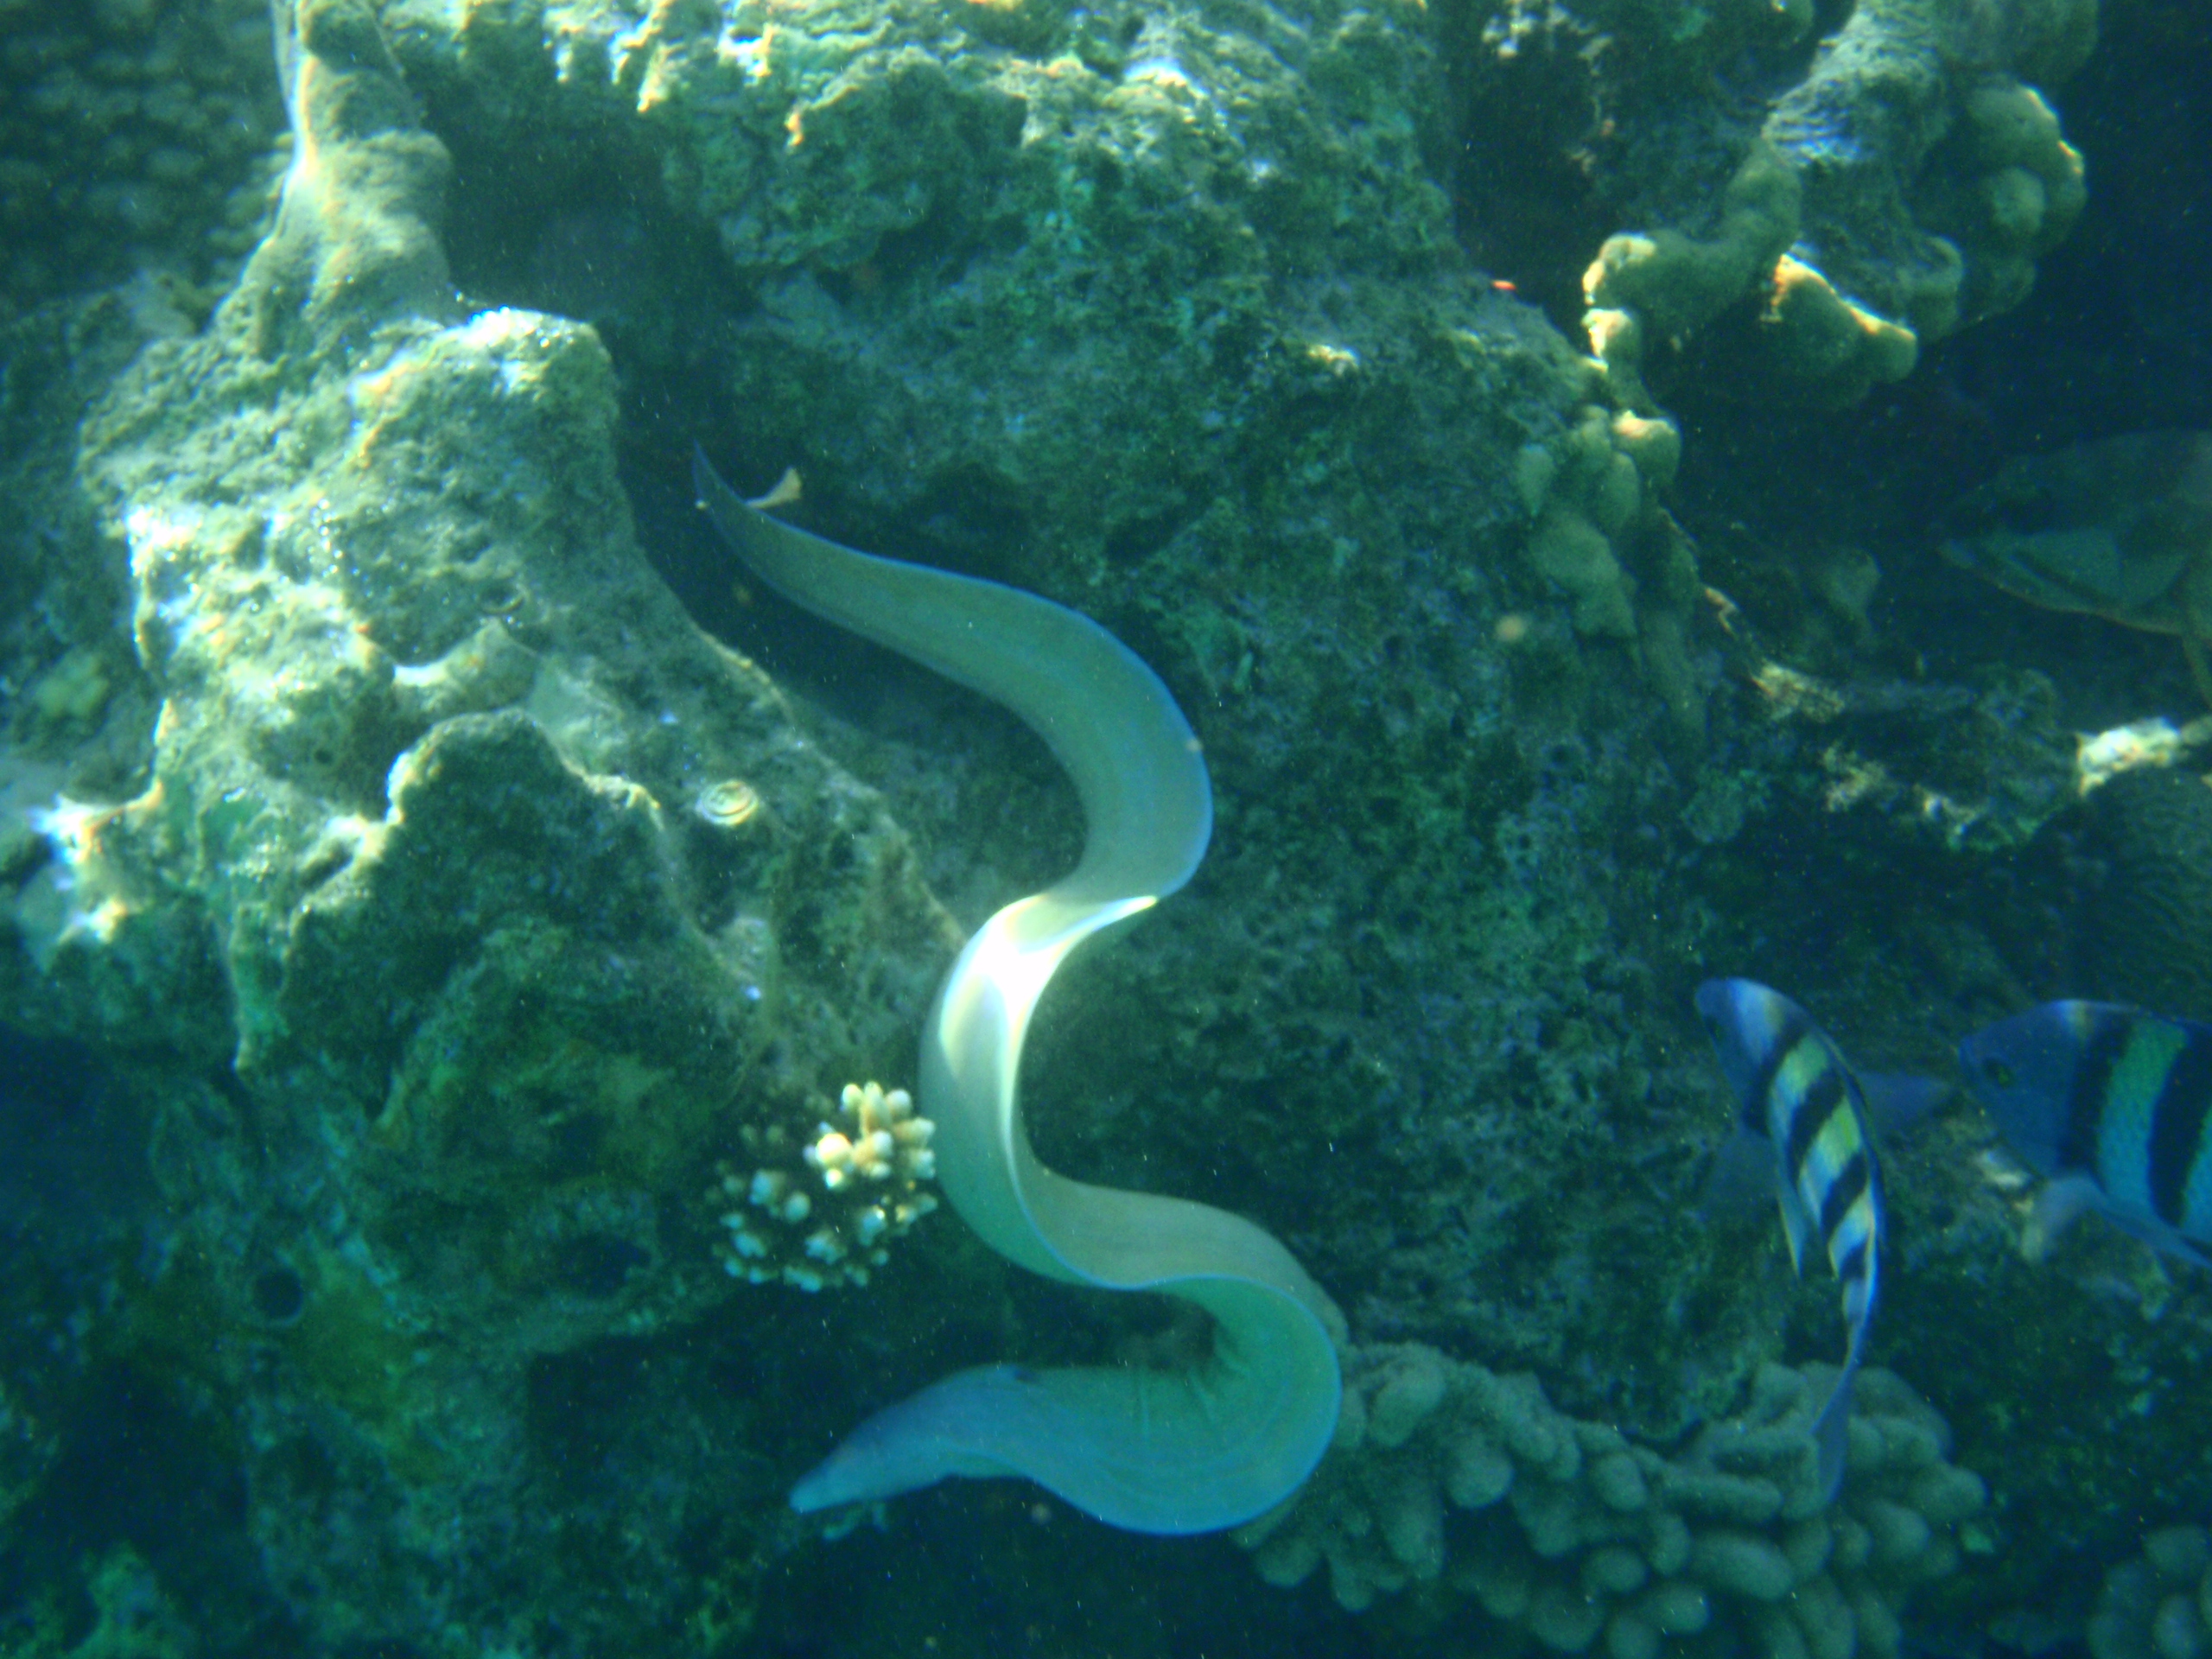 Snow Moray eel